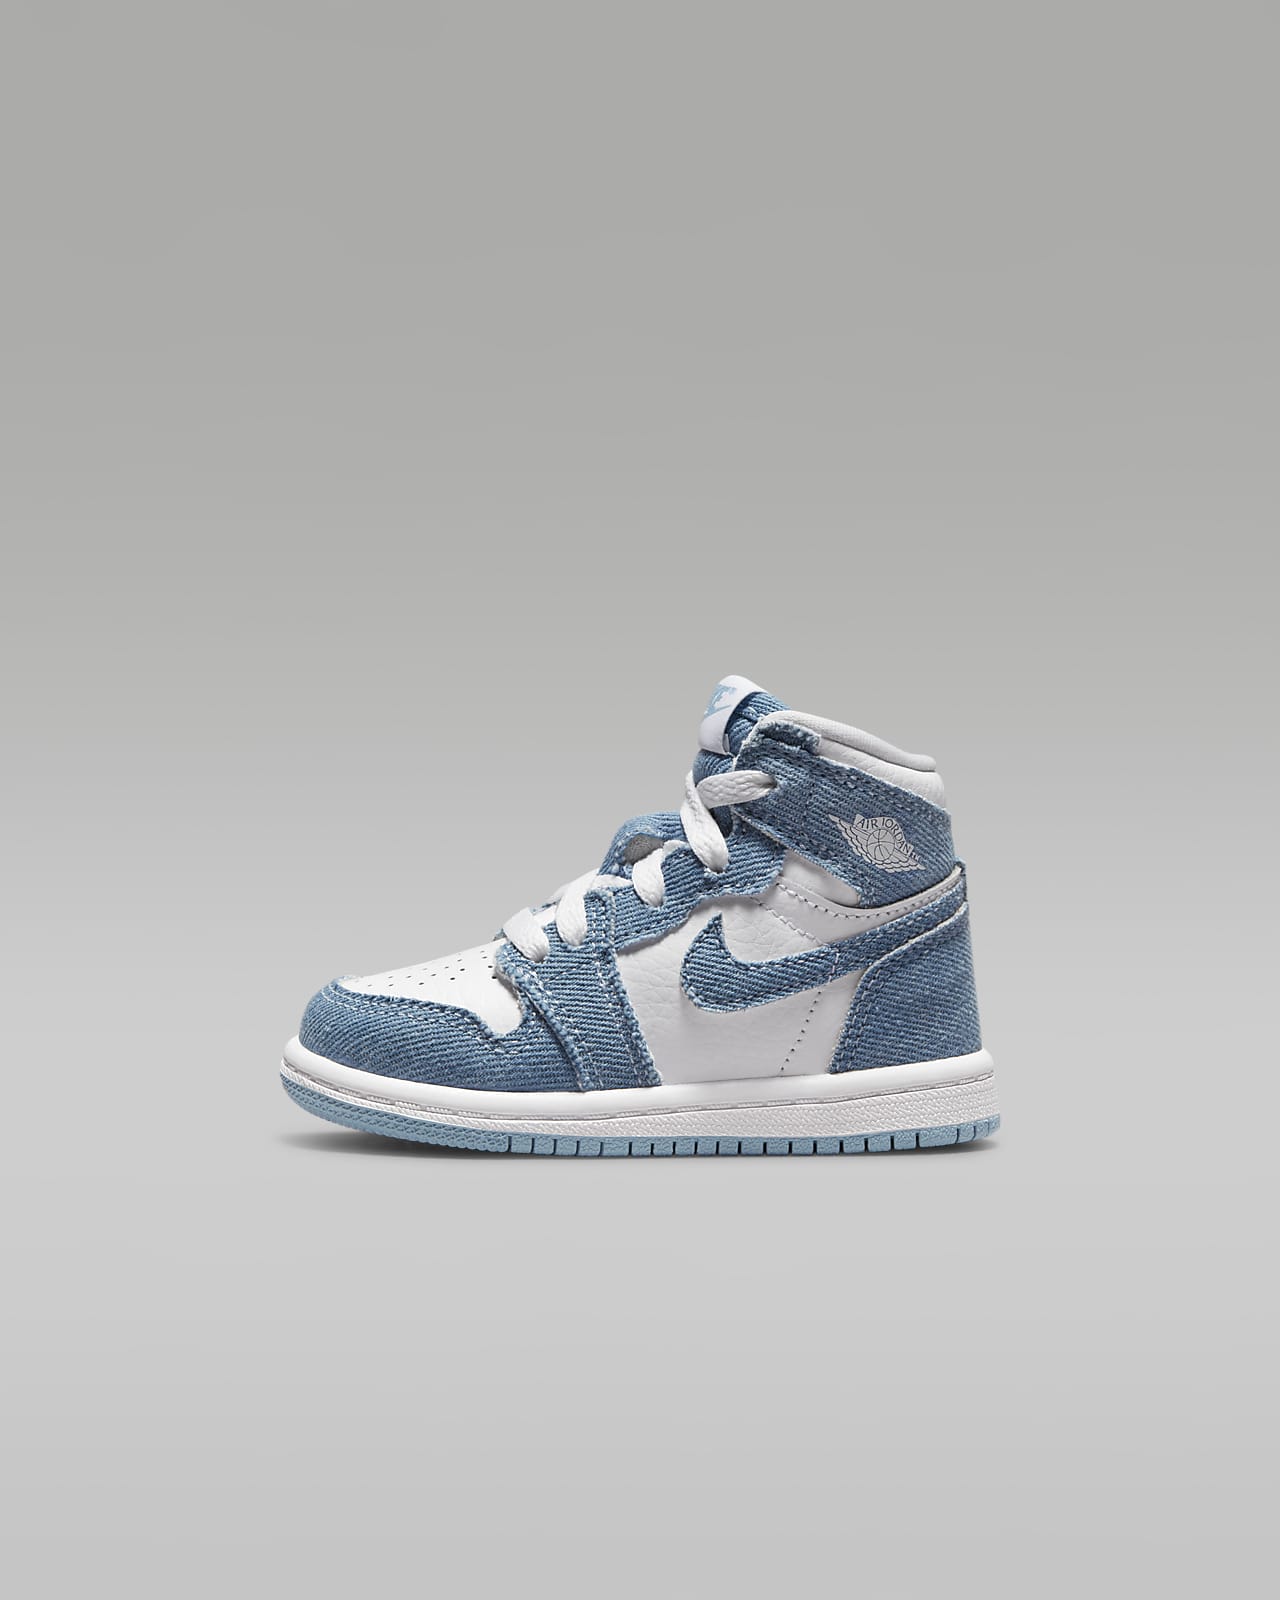 Jordan 1 Retro High OG Zapatillas - Bebé e infantil. Nike ES